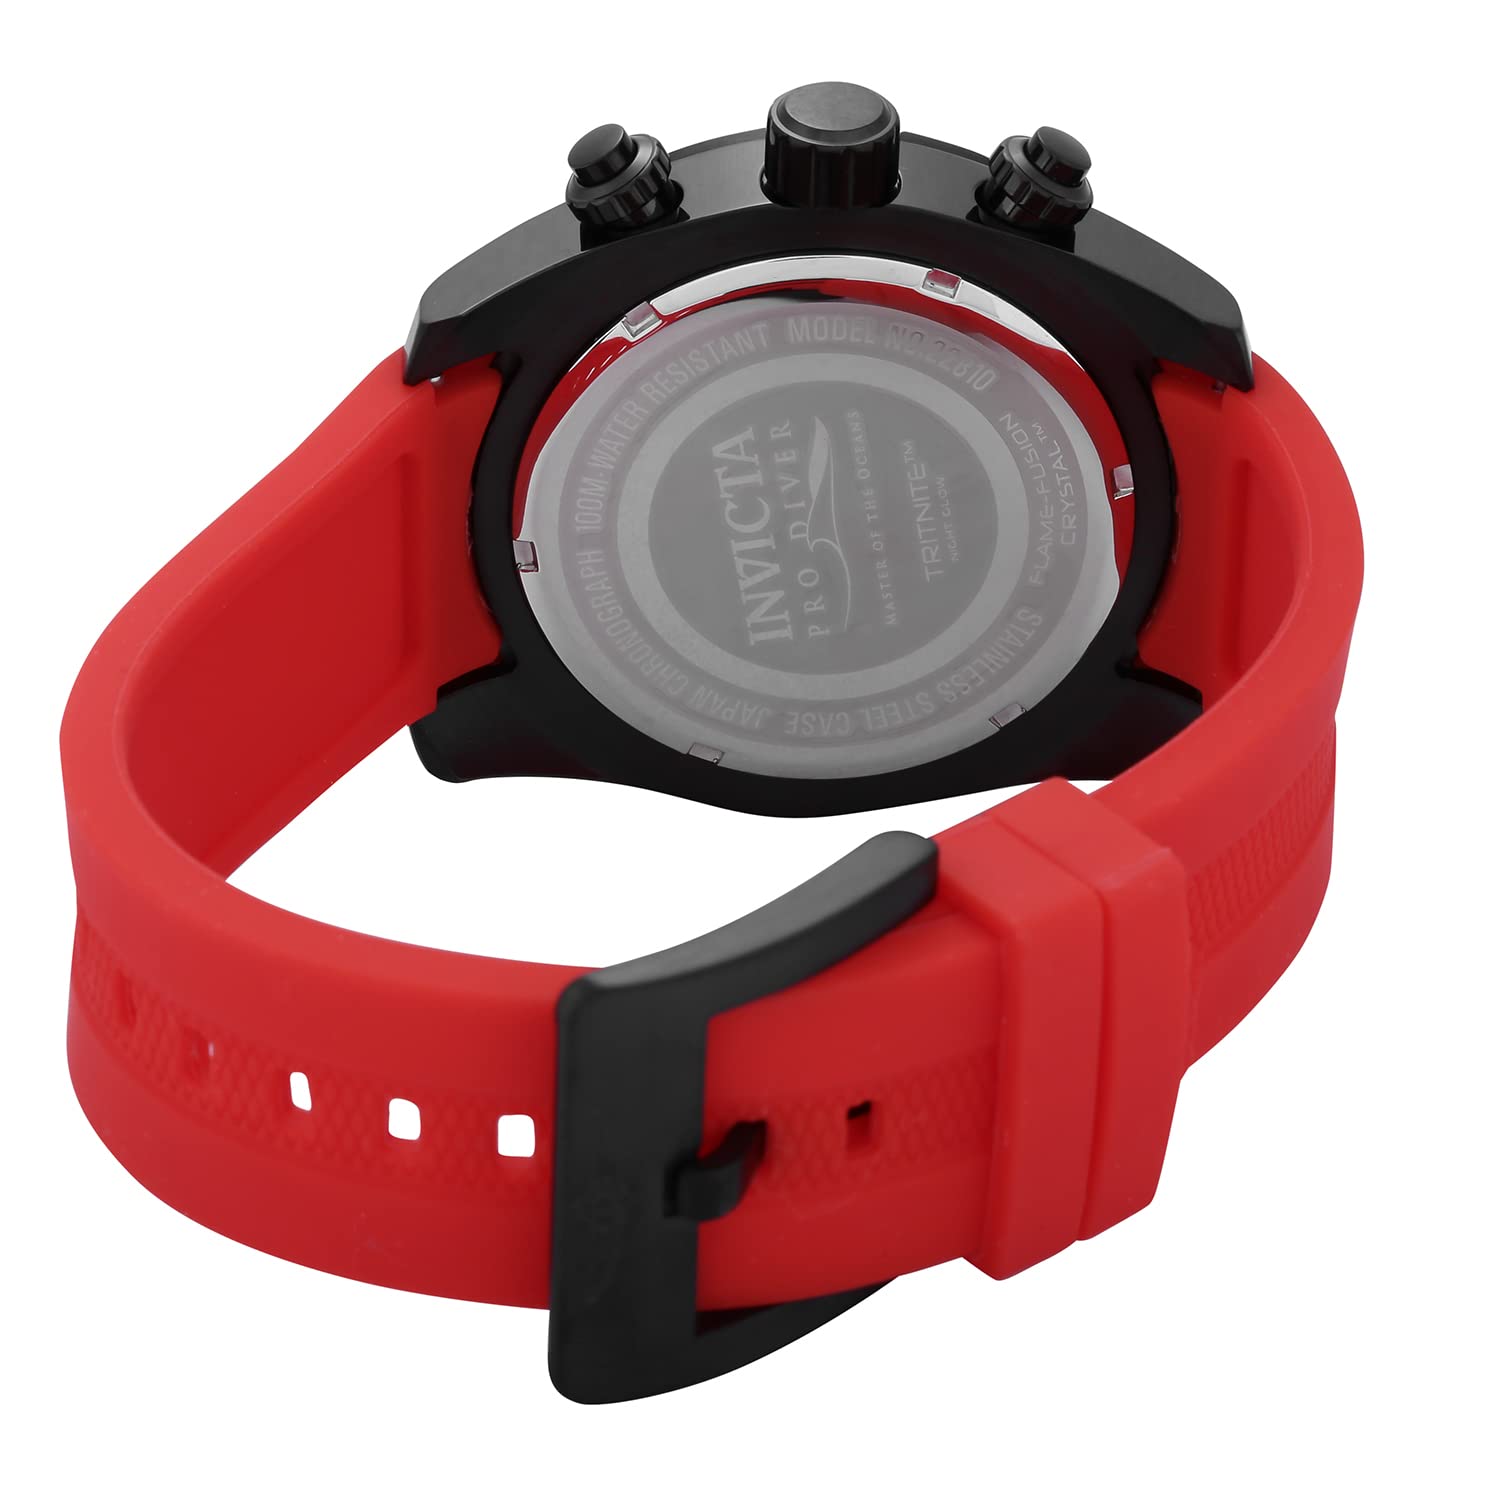 Invicta Men's 22810 Pro Diver Analog Display Quartz Red Watch